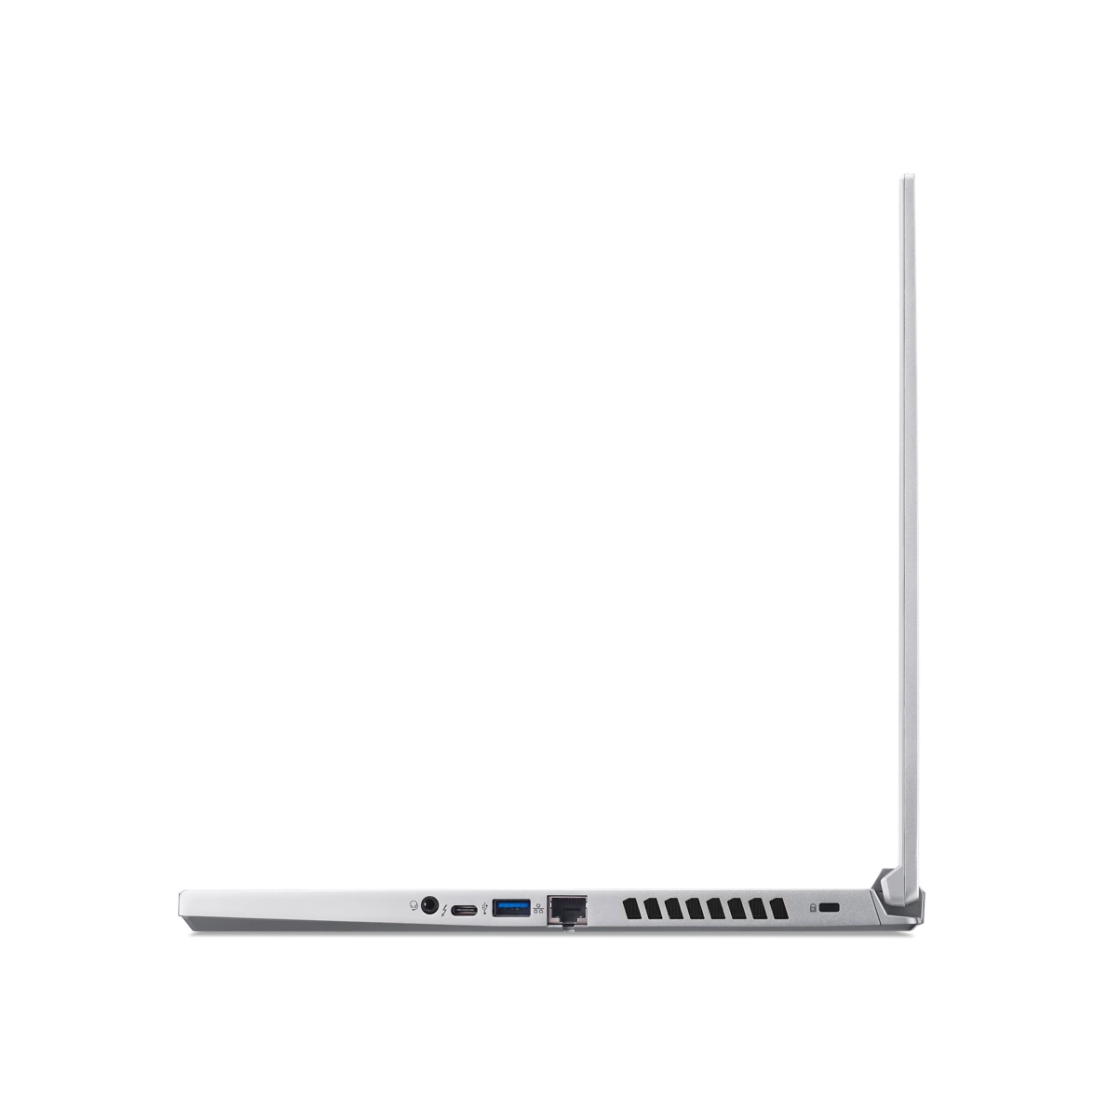 Acer Predator Triton PT316-51S-7362-US Core i7-12700h Rtx 3070ti 240hz Gaming Laptops (Brand New)